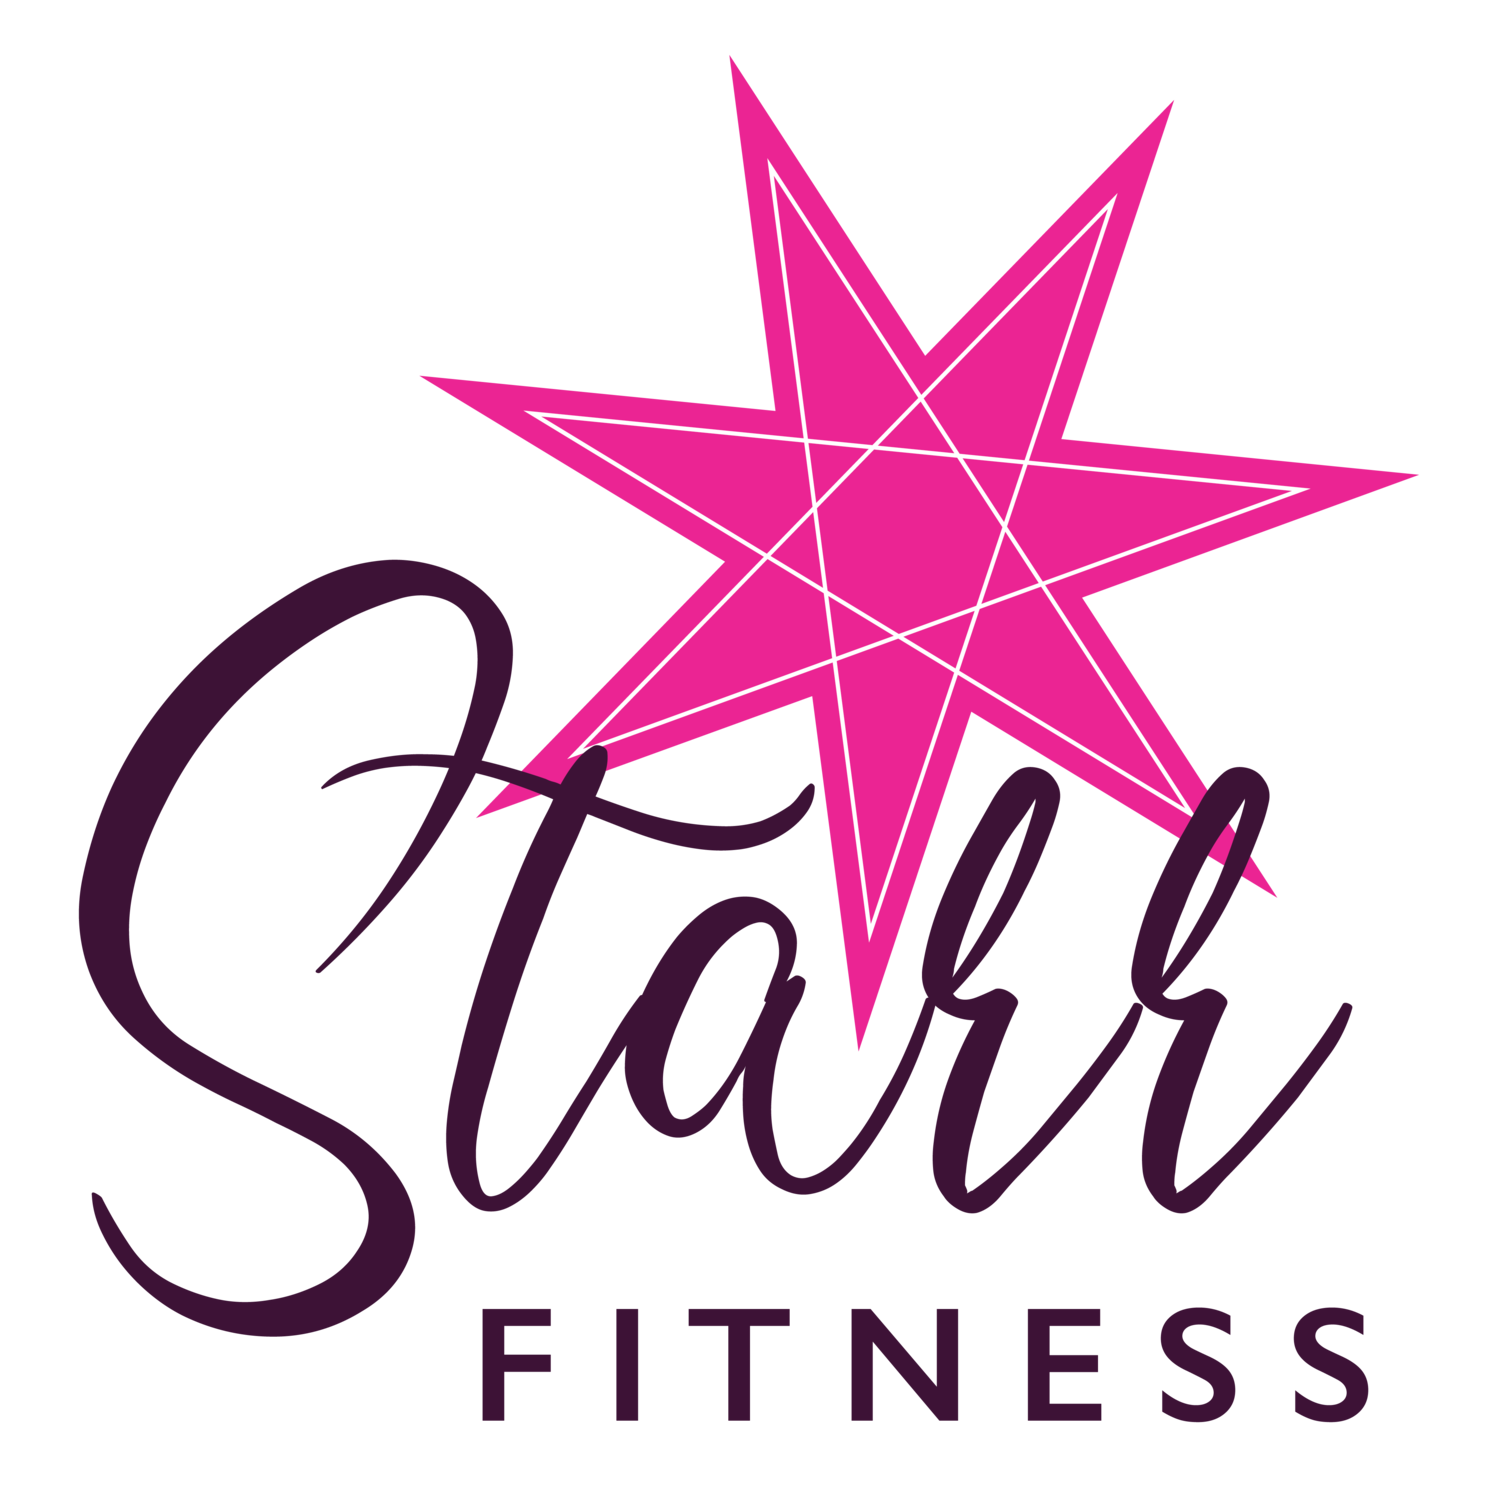 Starr Fitness